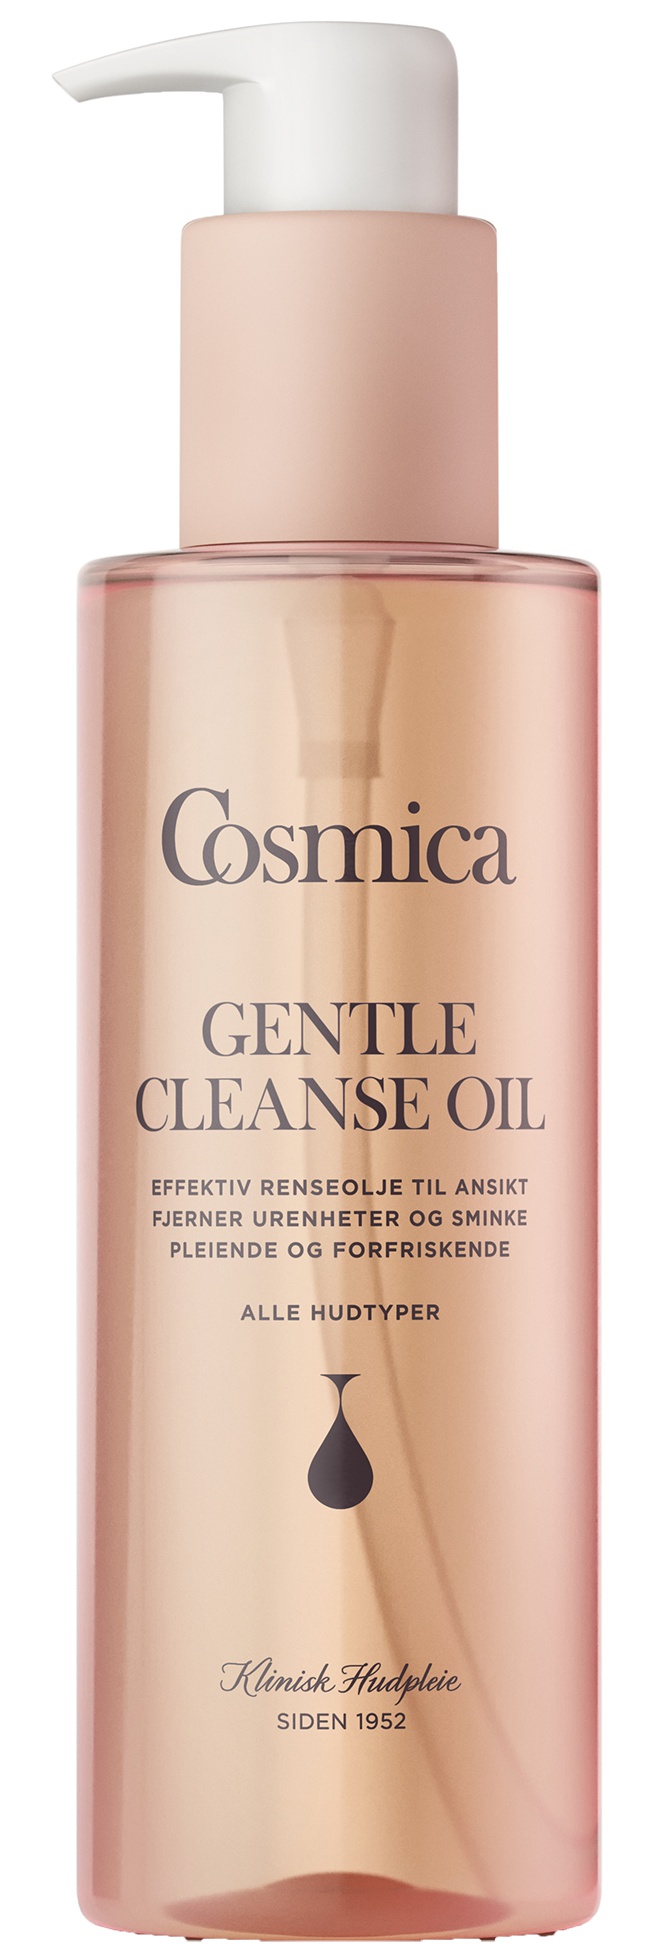 Cosmica Gentle Cleanse Oil